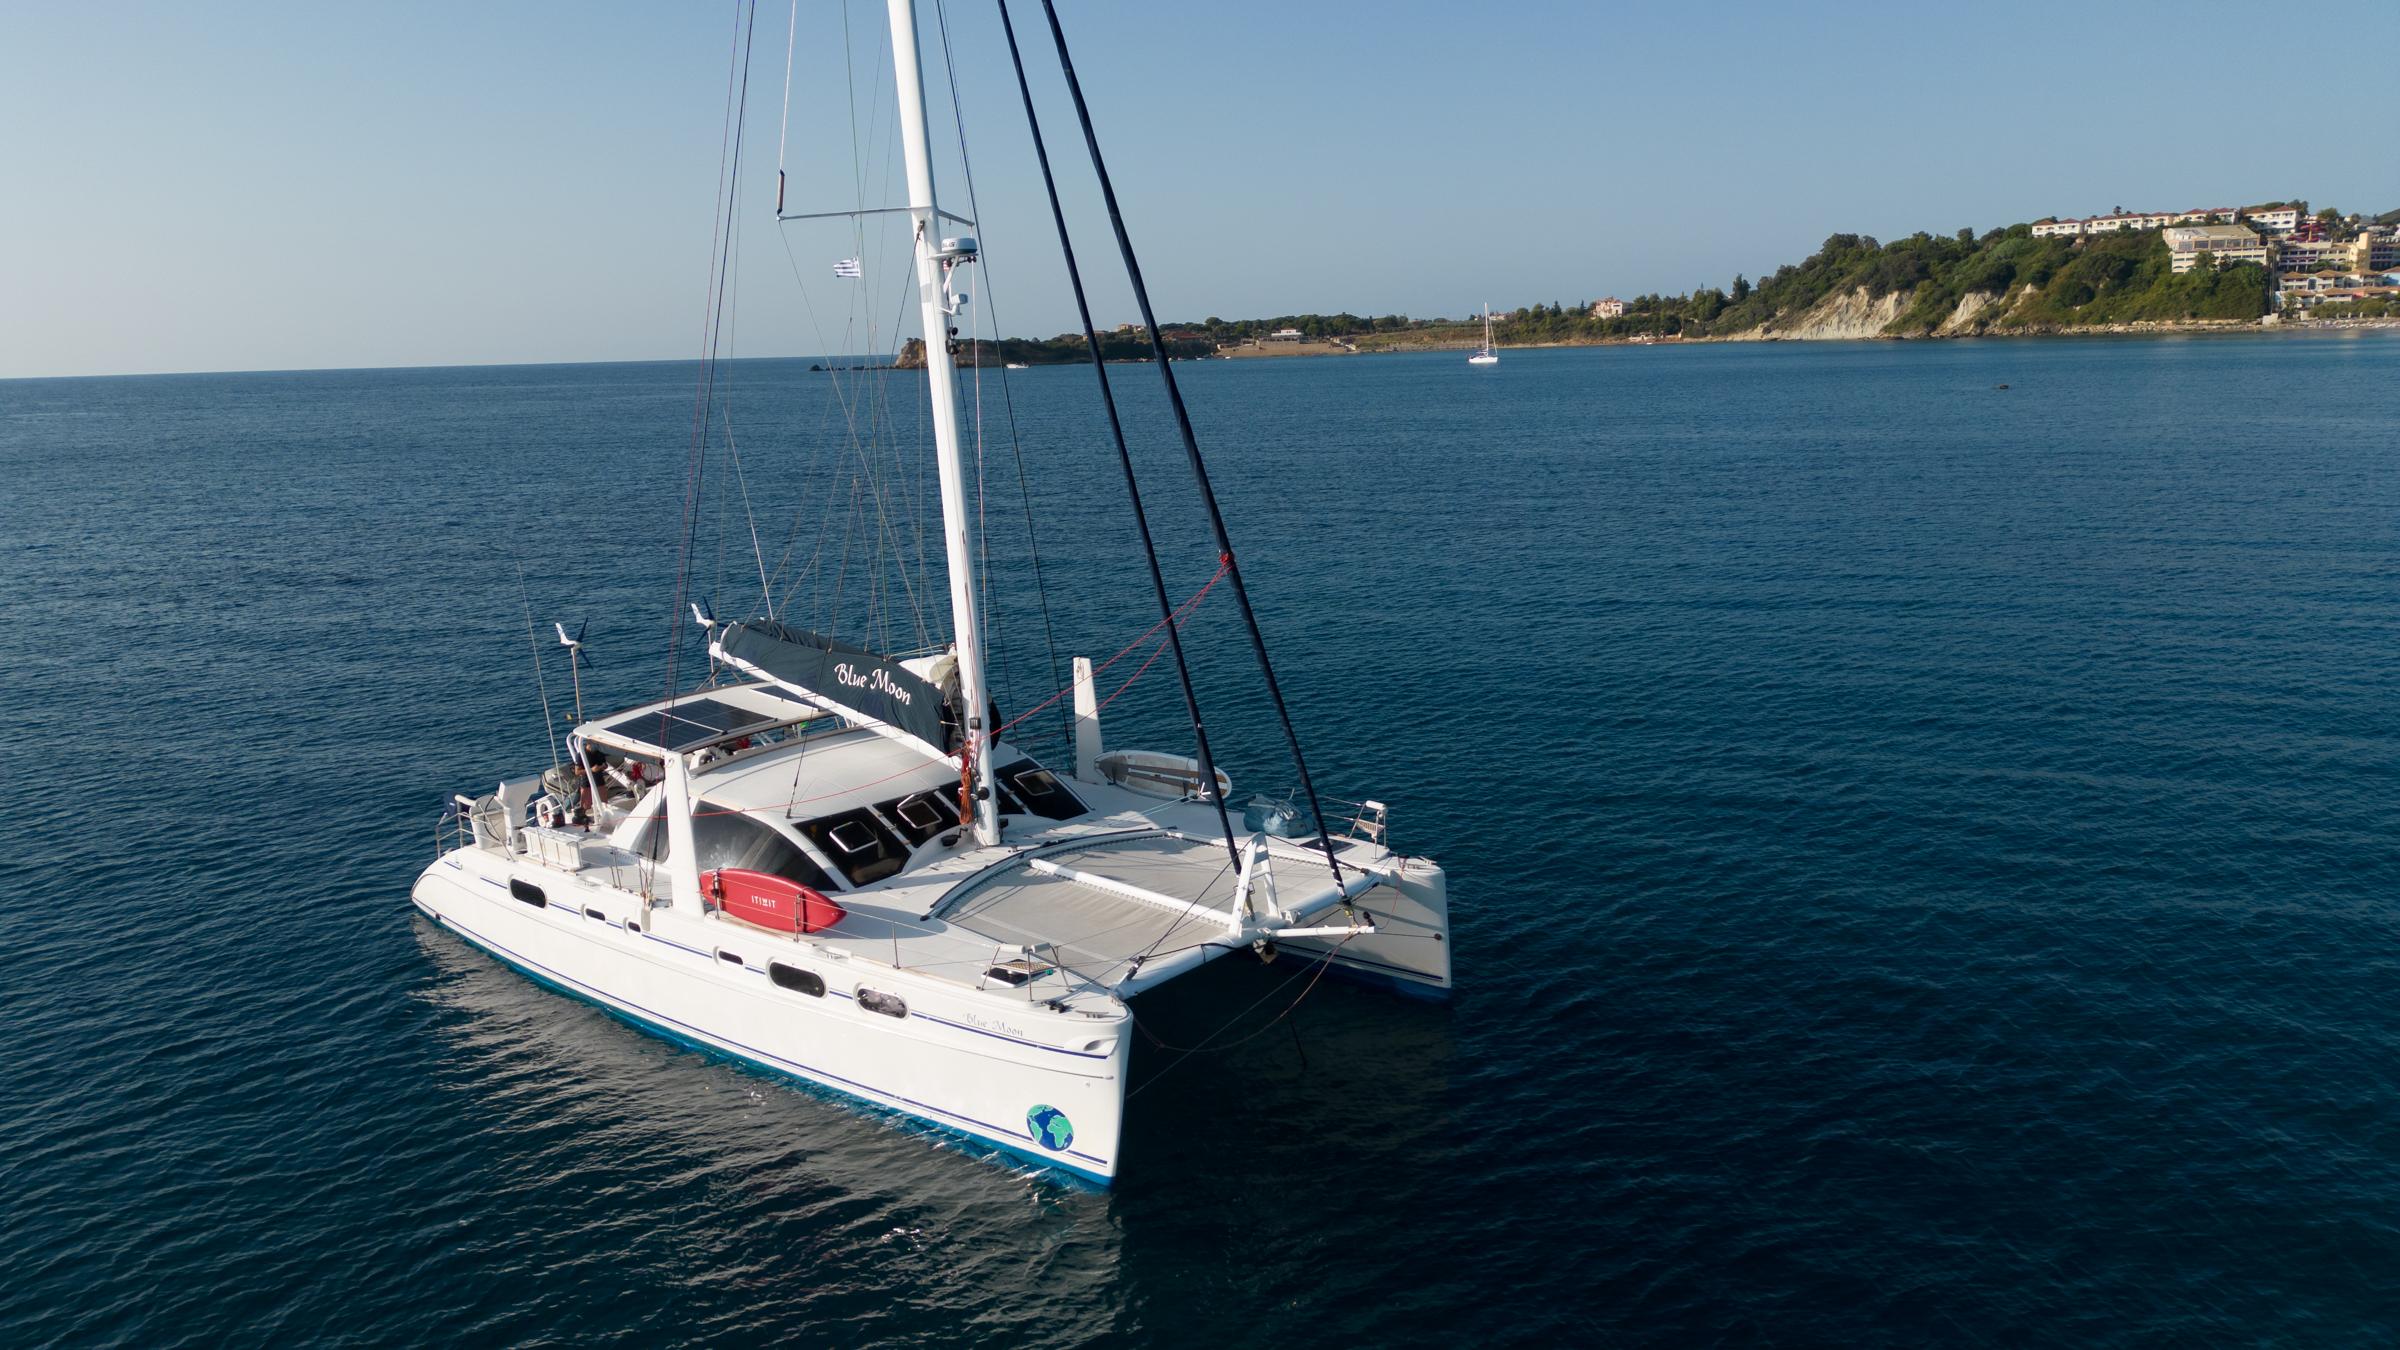 Blue Moon Yacht for Sale | 58 Catana Yachts Porto Heli, Greece | Denison Yacht Sales